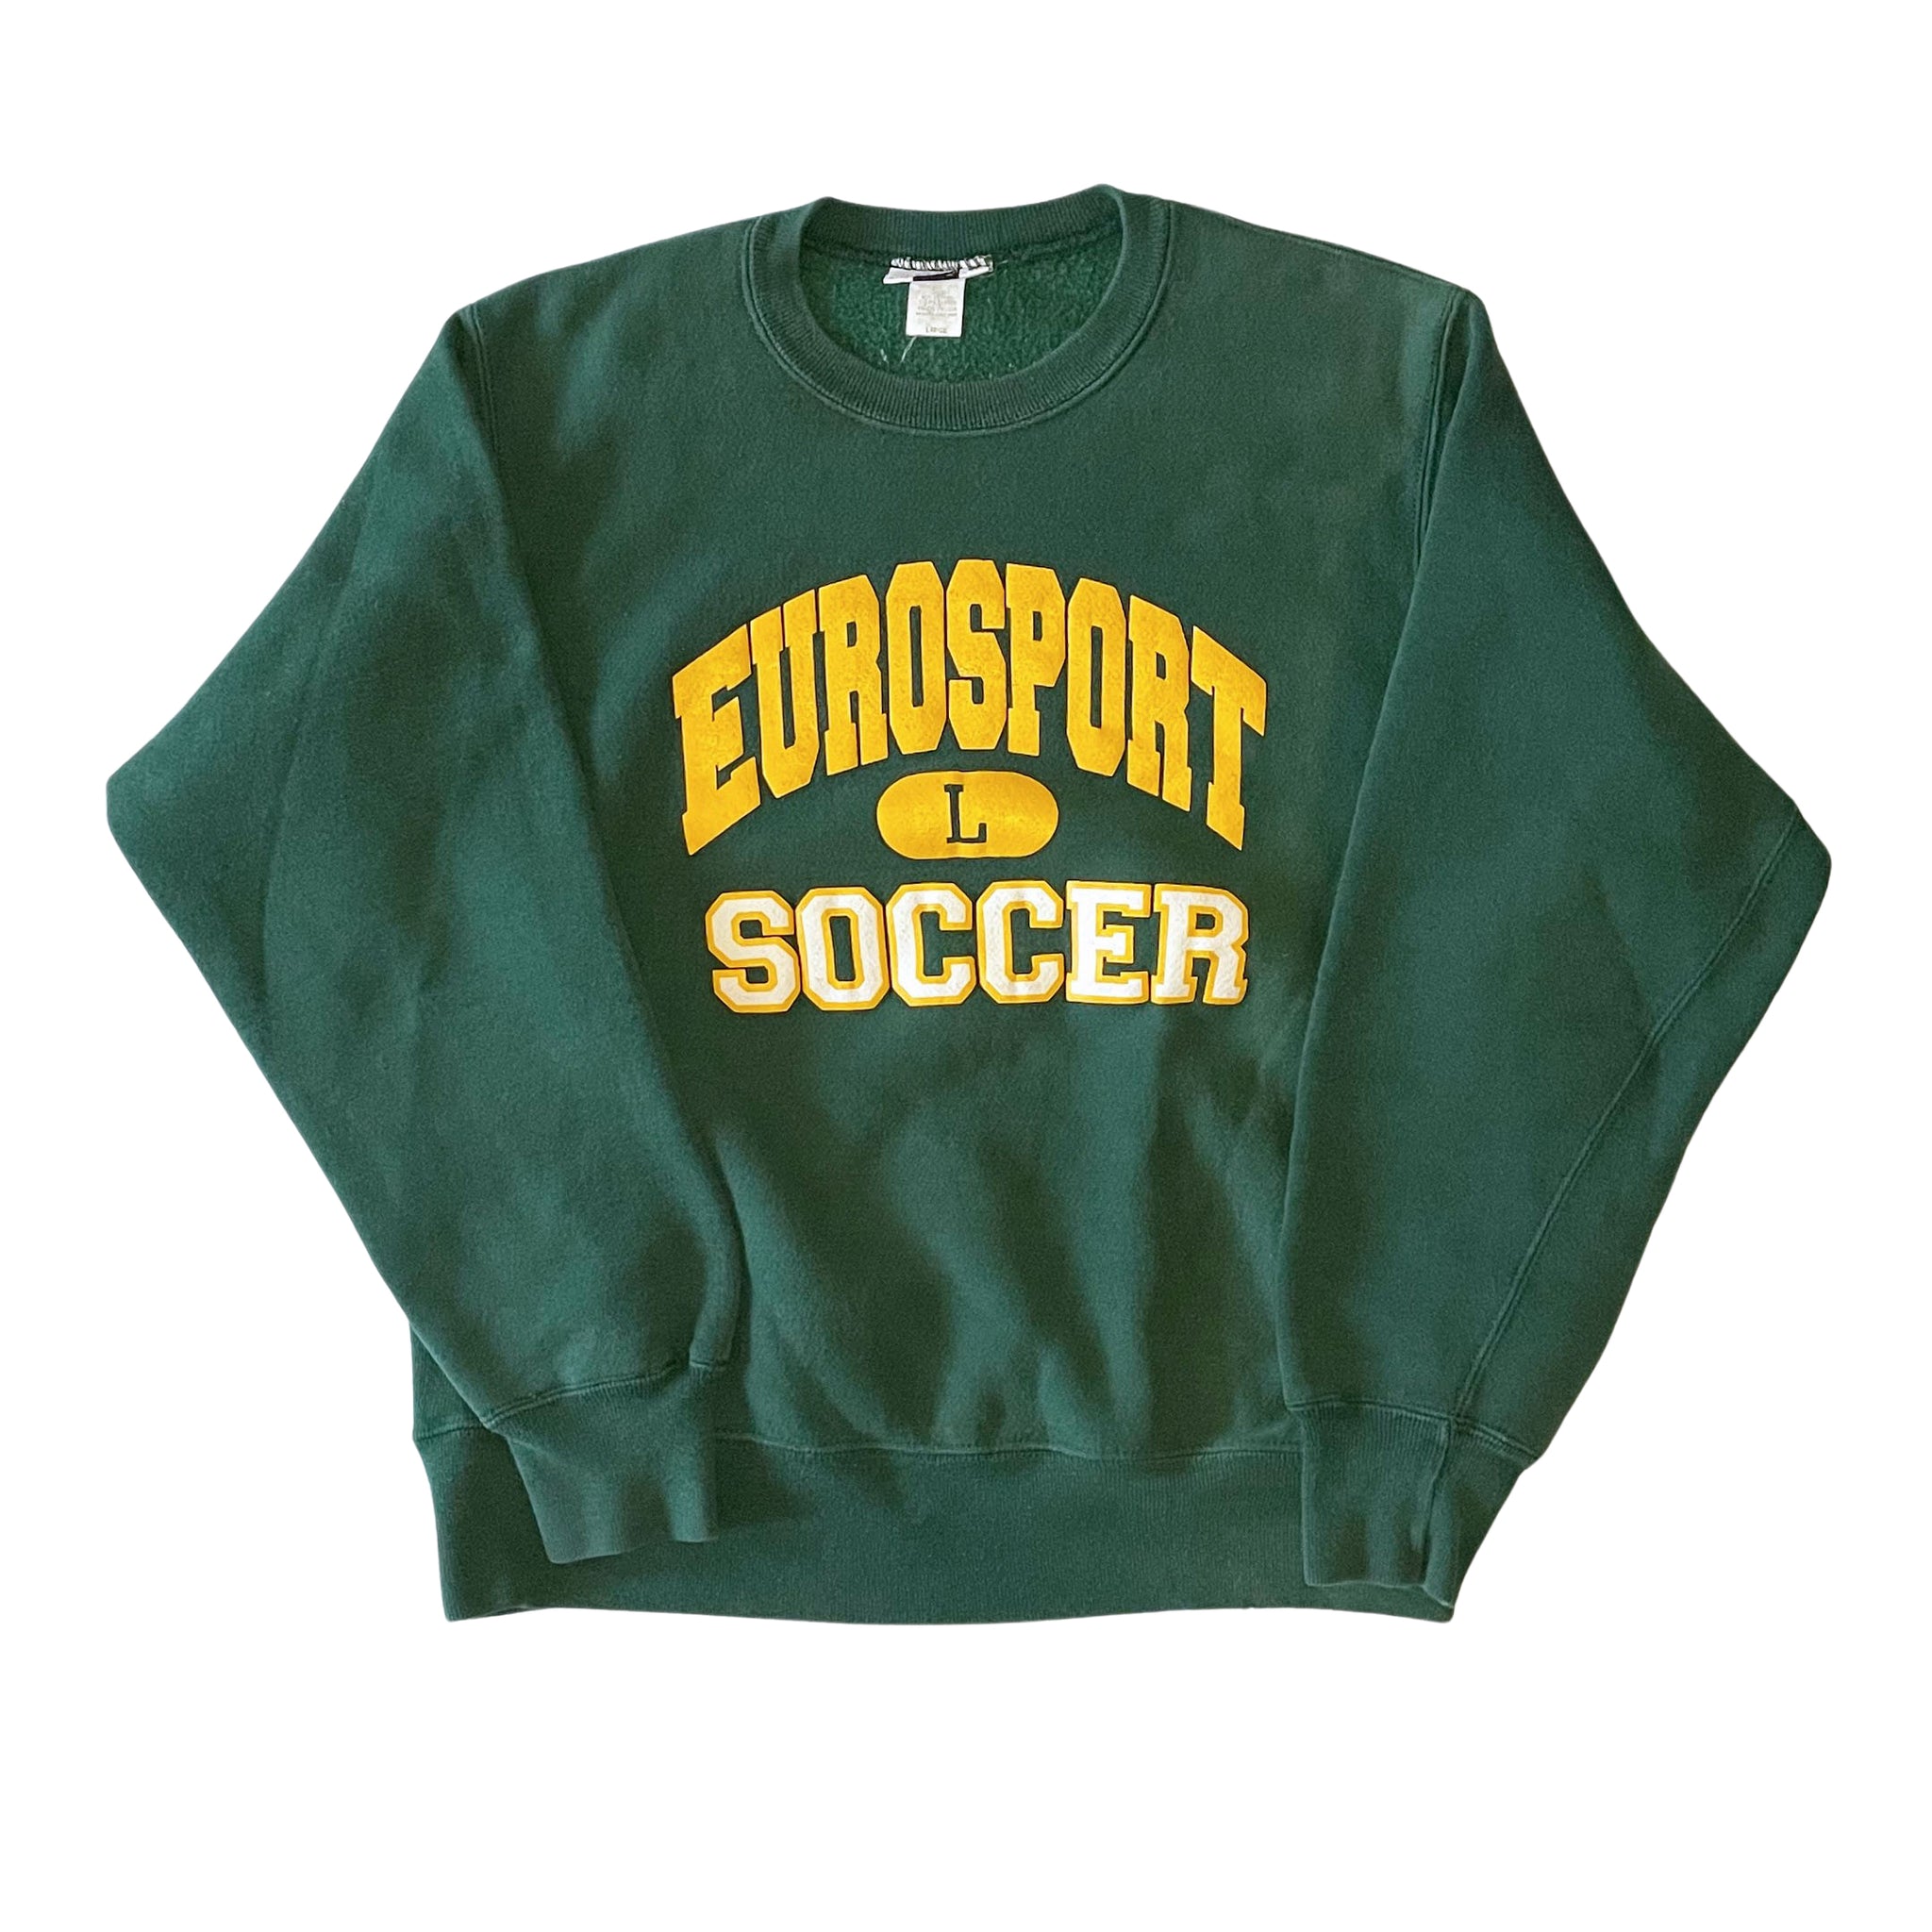 Eurosport Soccer Crewneck - L